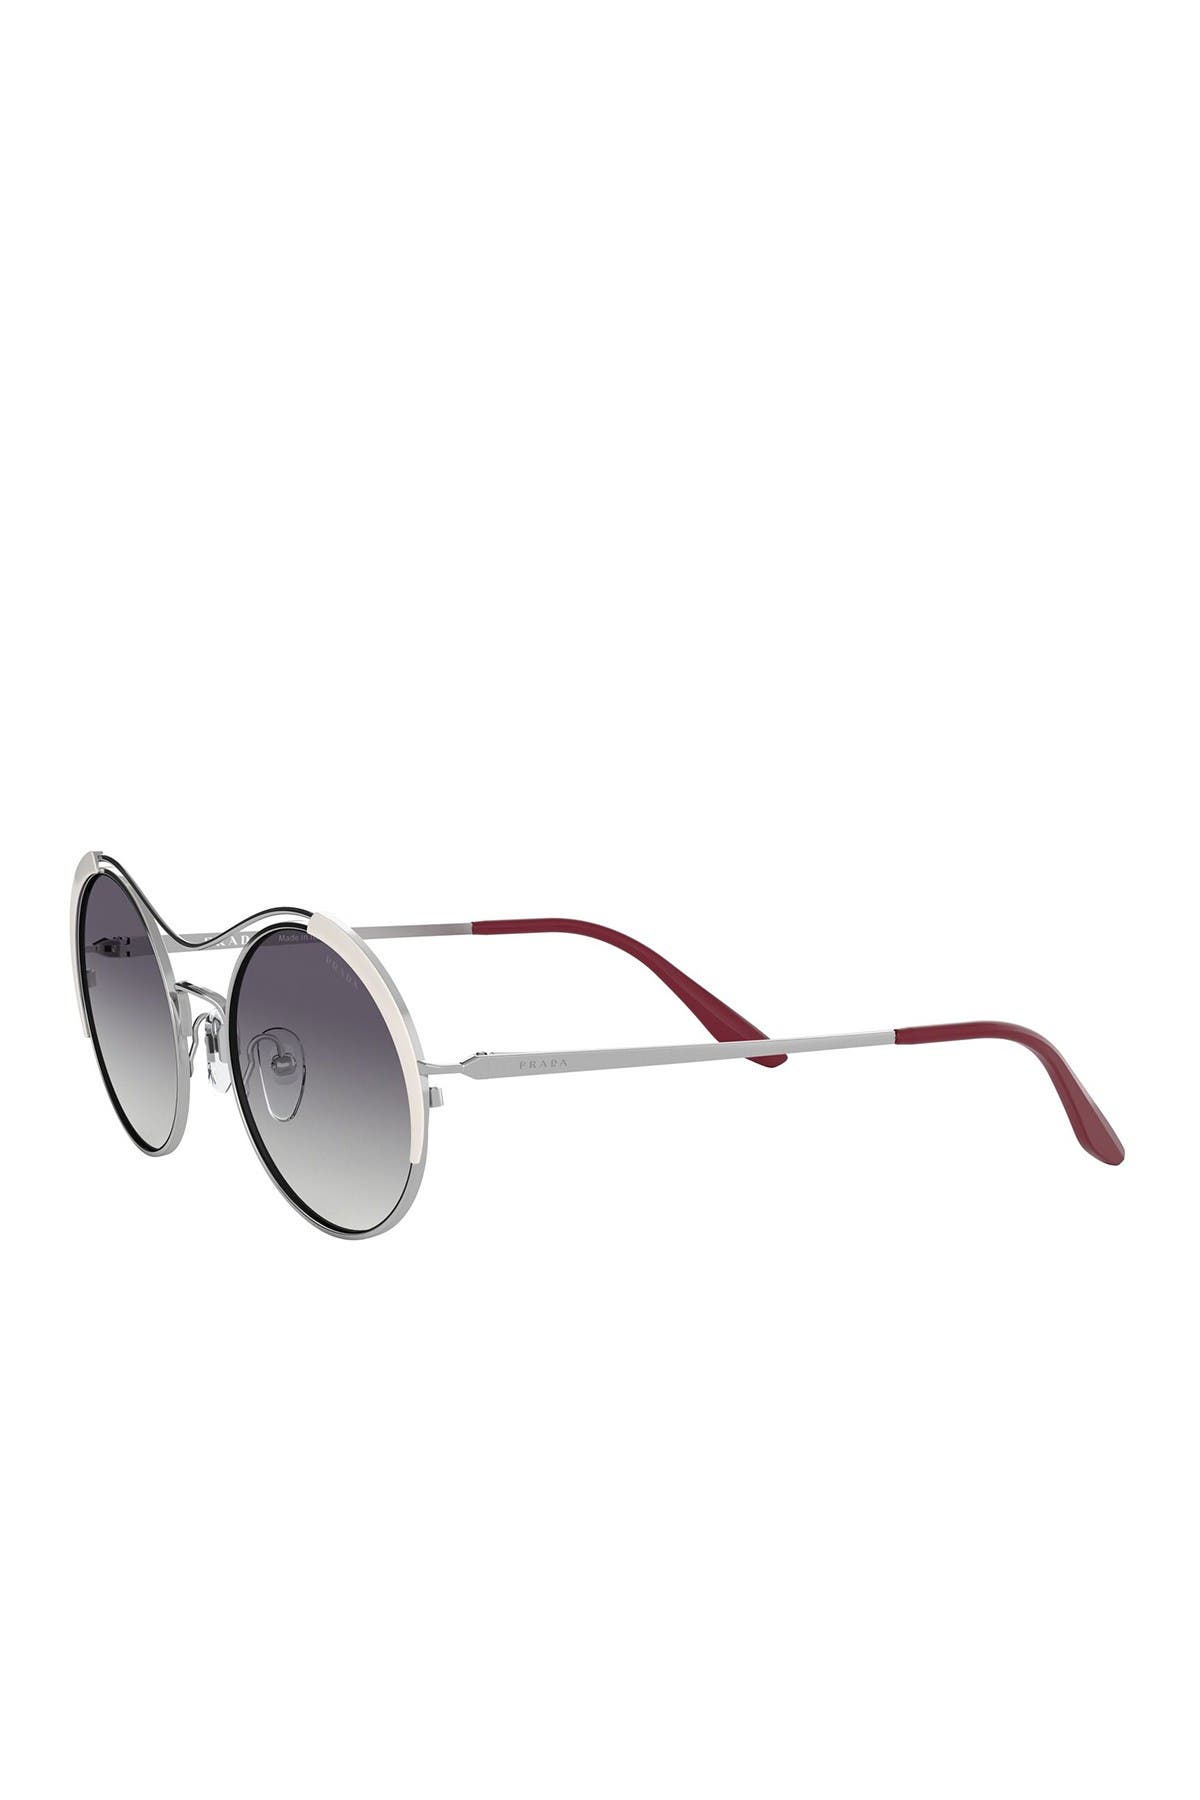 prada 53mm round sunglasses